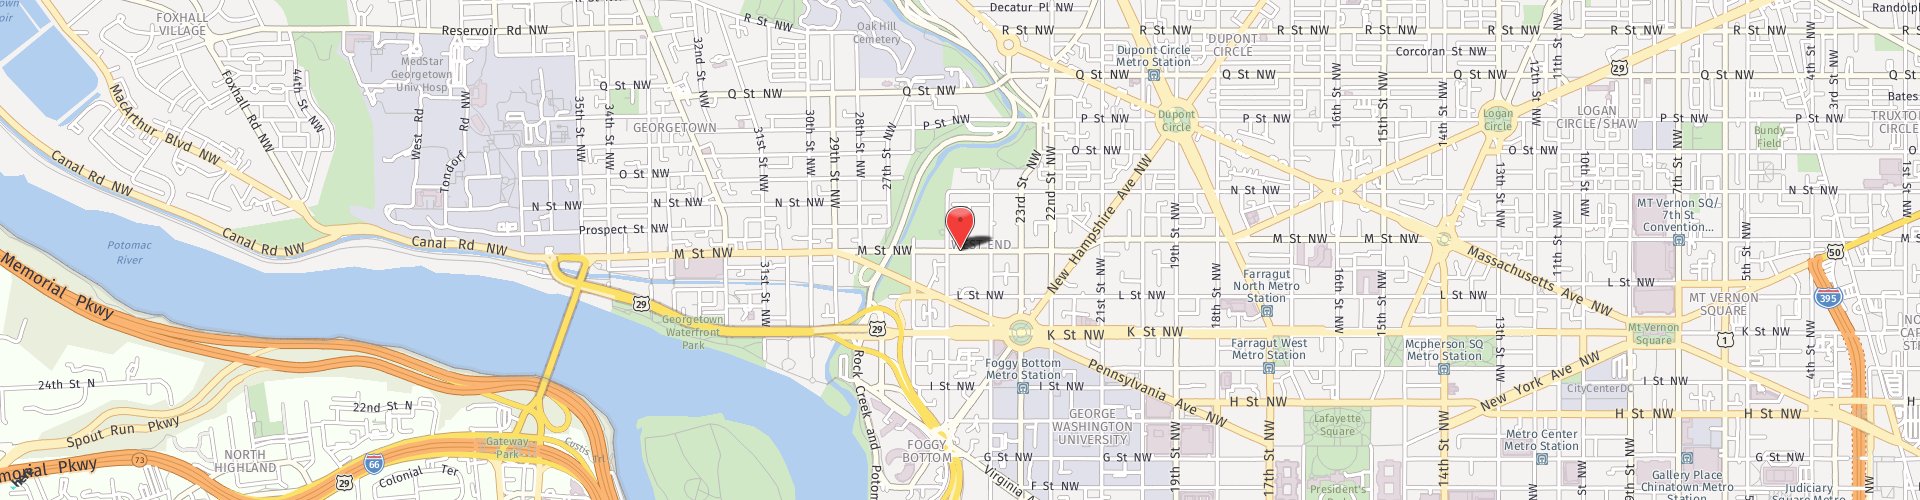 Location Map: 2440 M Street NW Washington, DC 20037